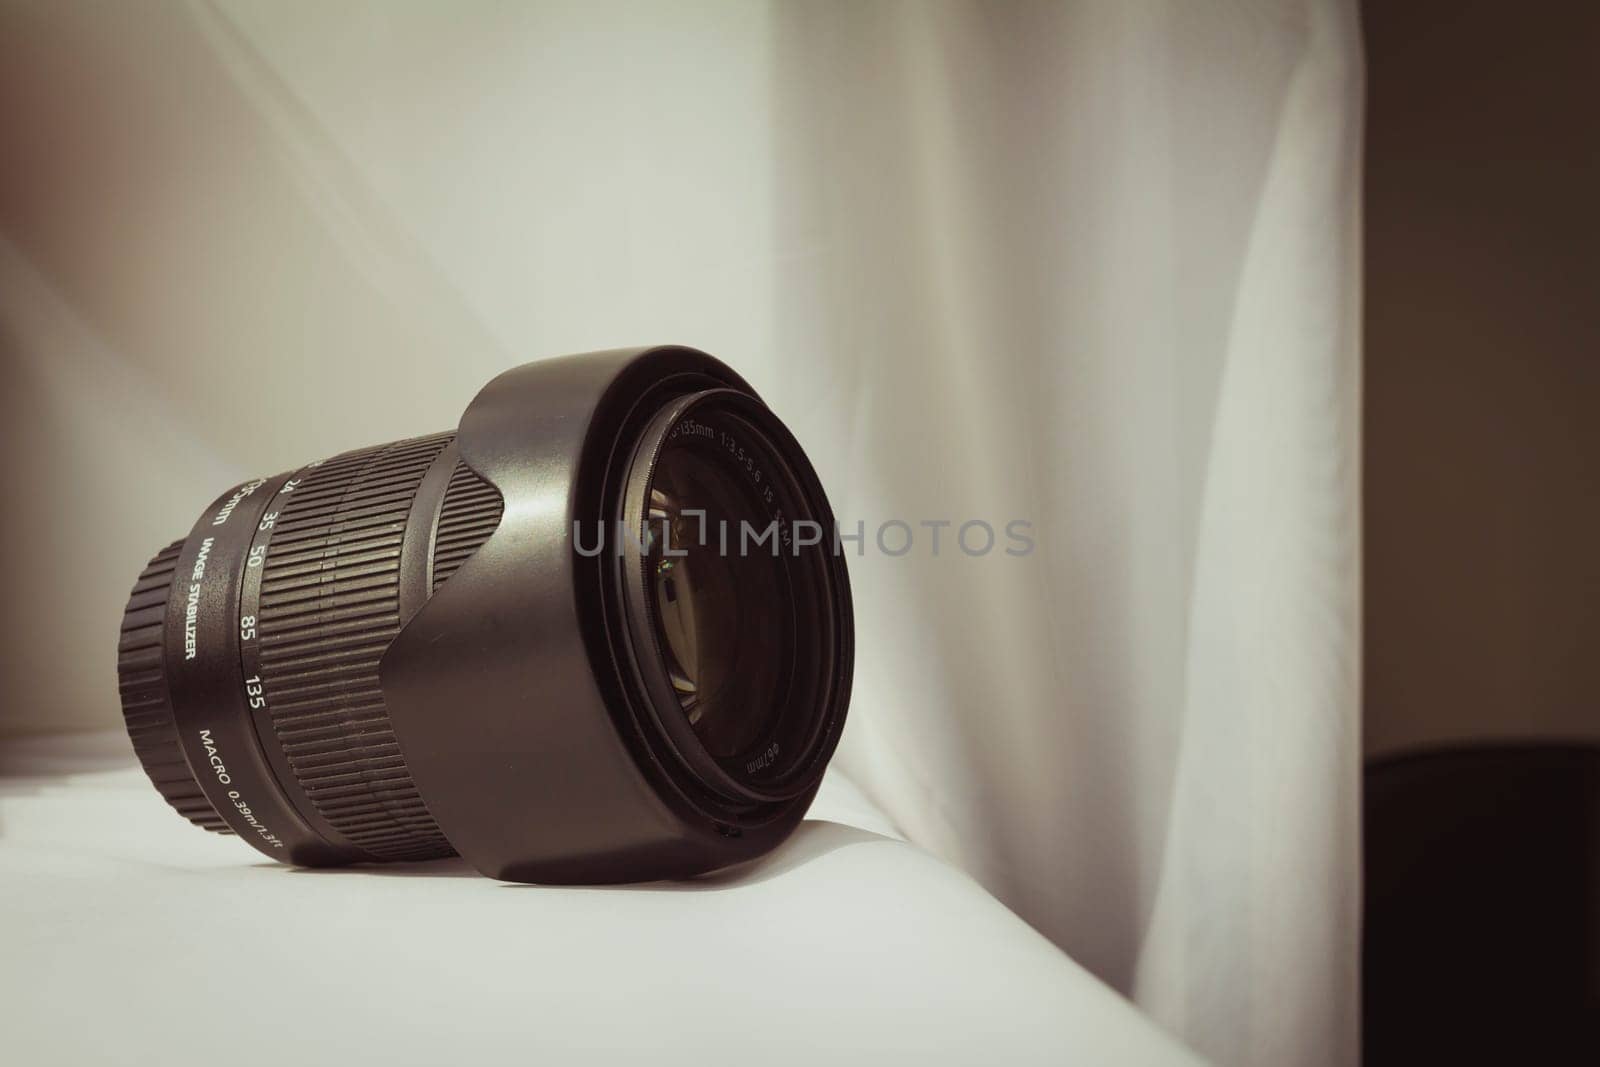 Black camera zoom lens on white cloth.